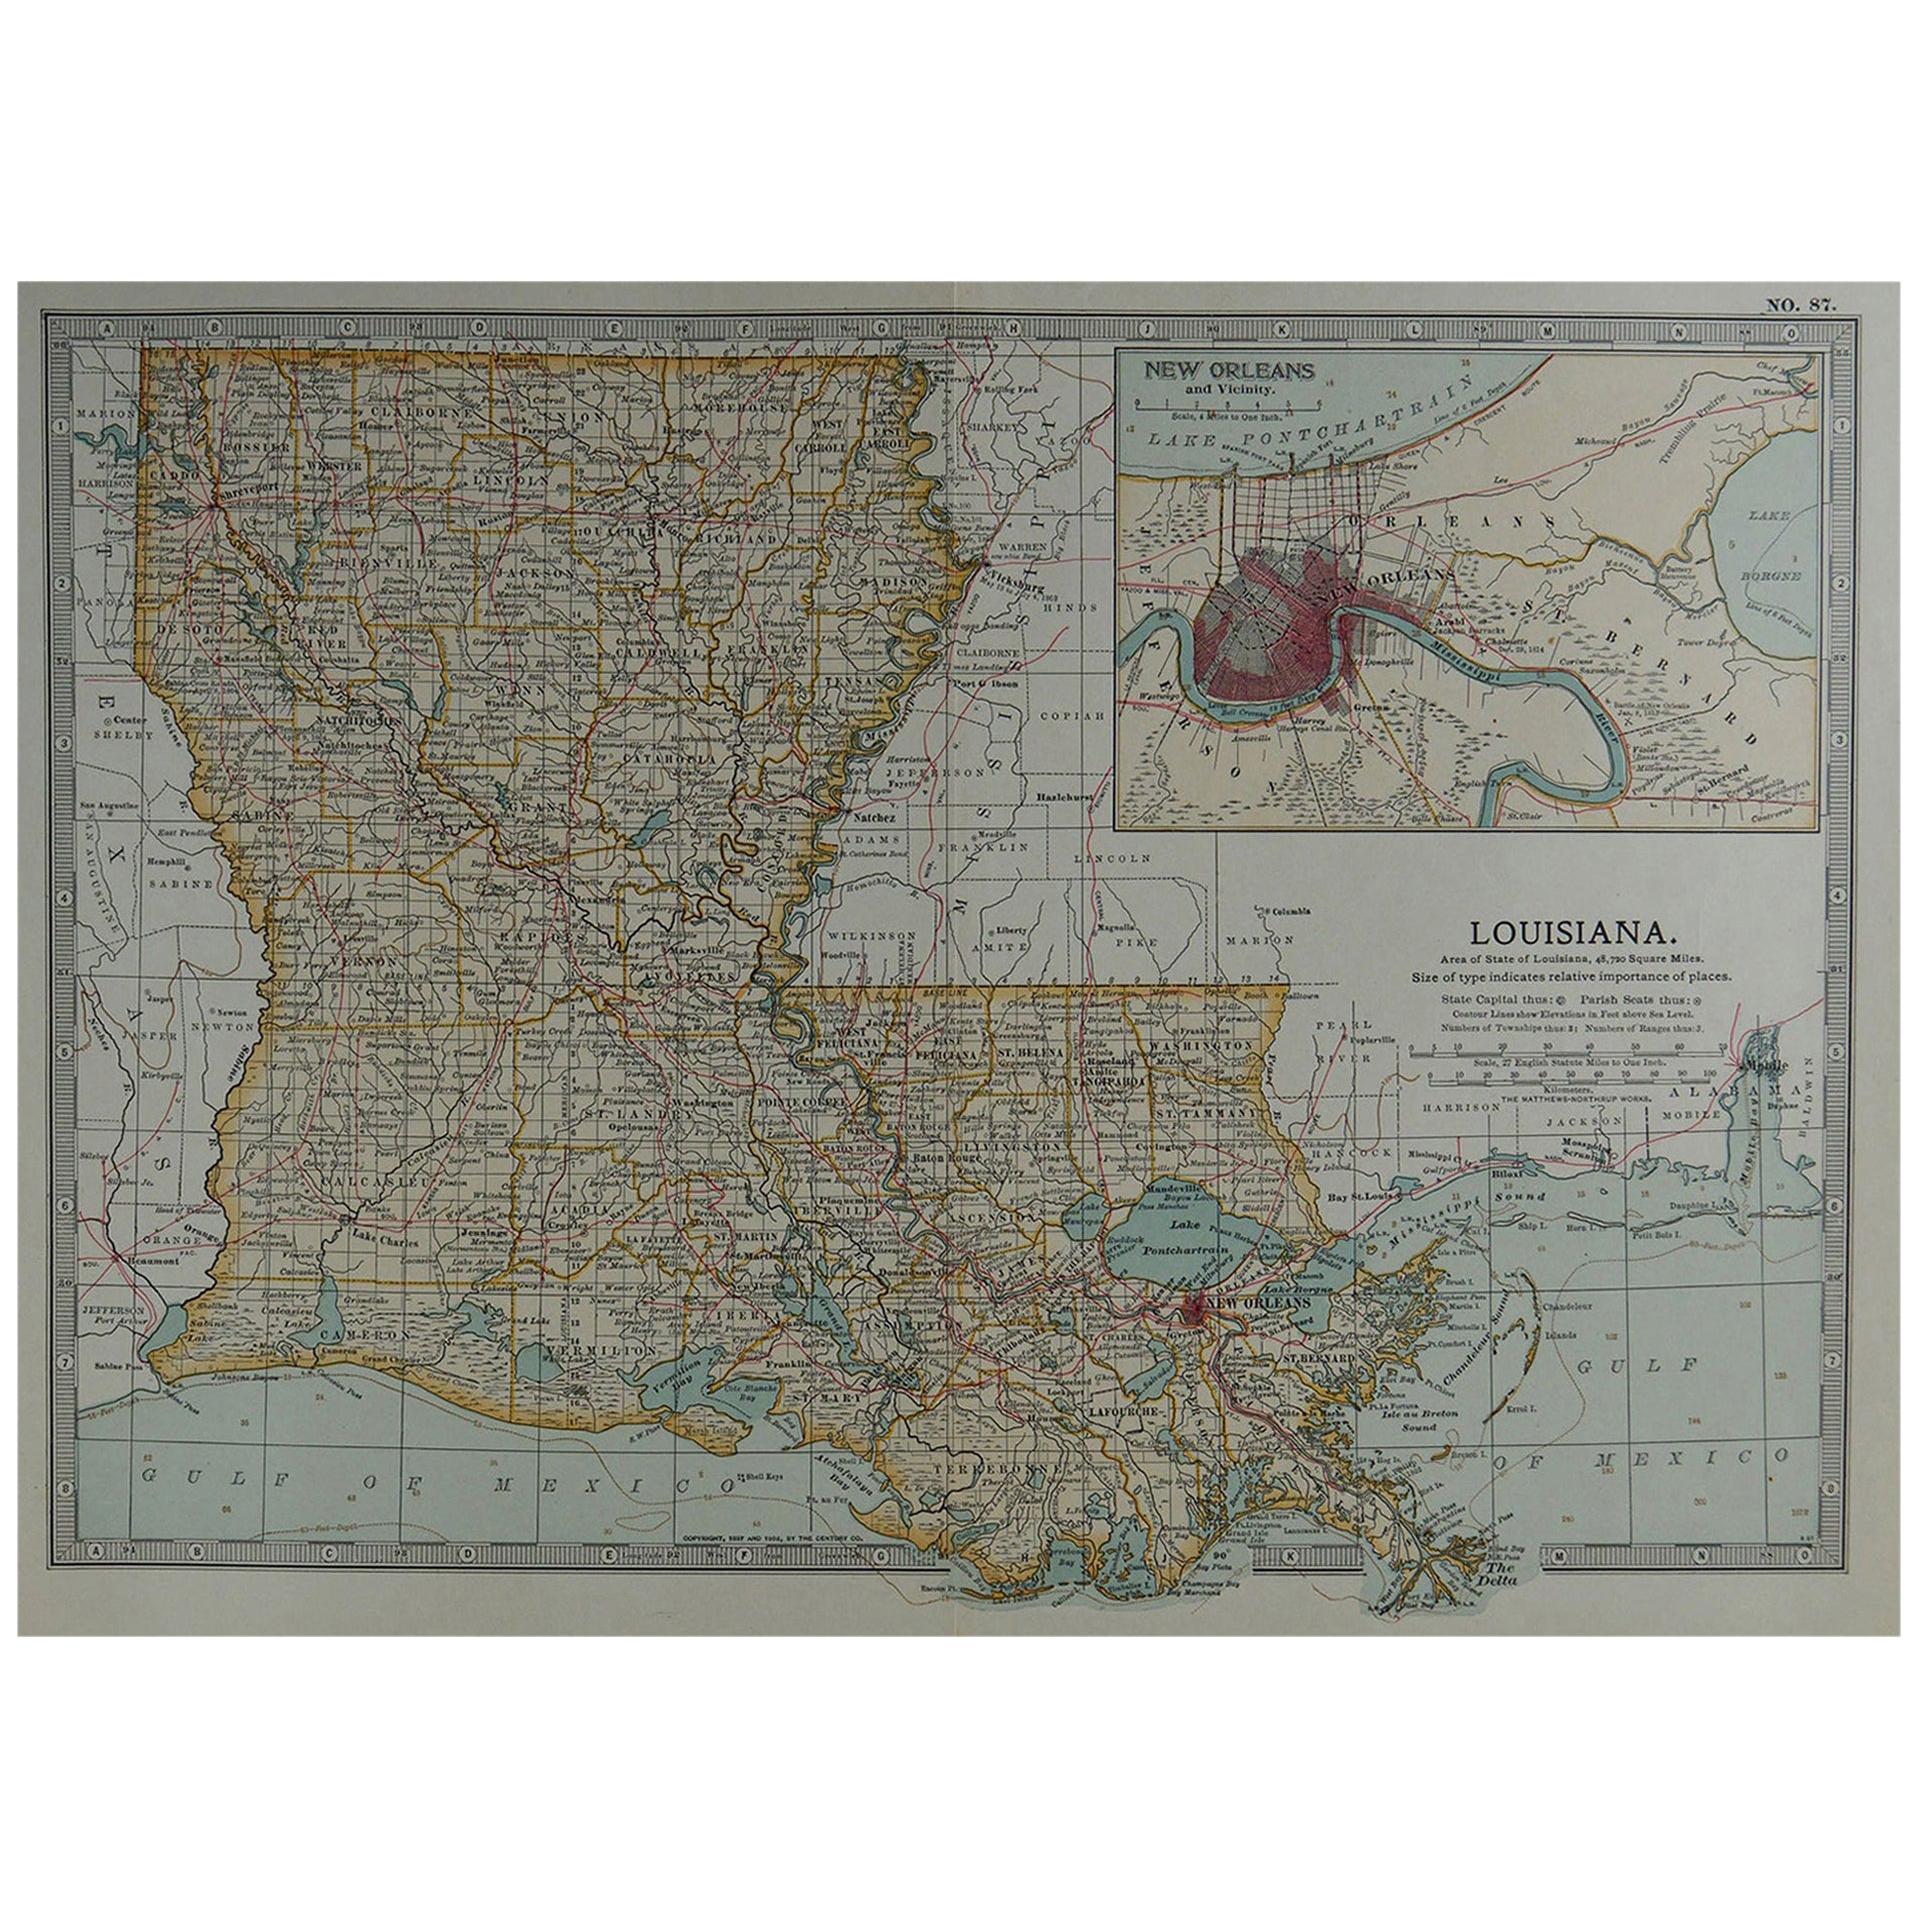 Original Antique Map of Louisiana, circa 1890